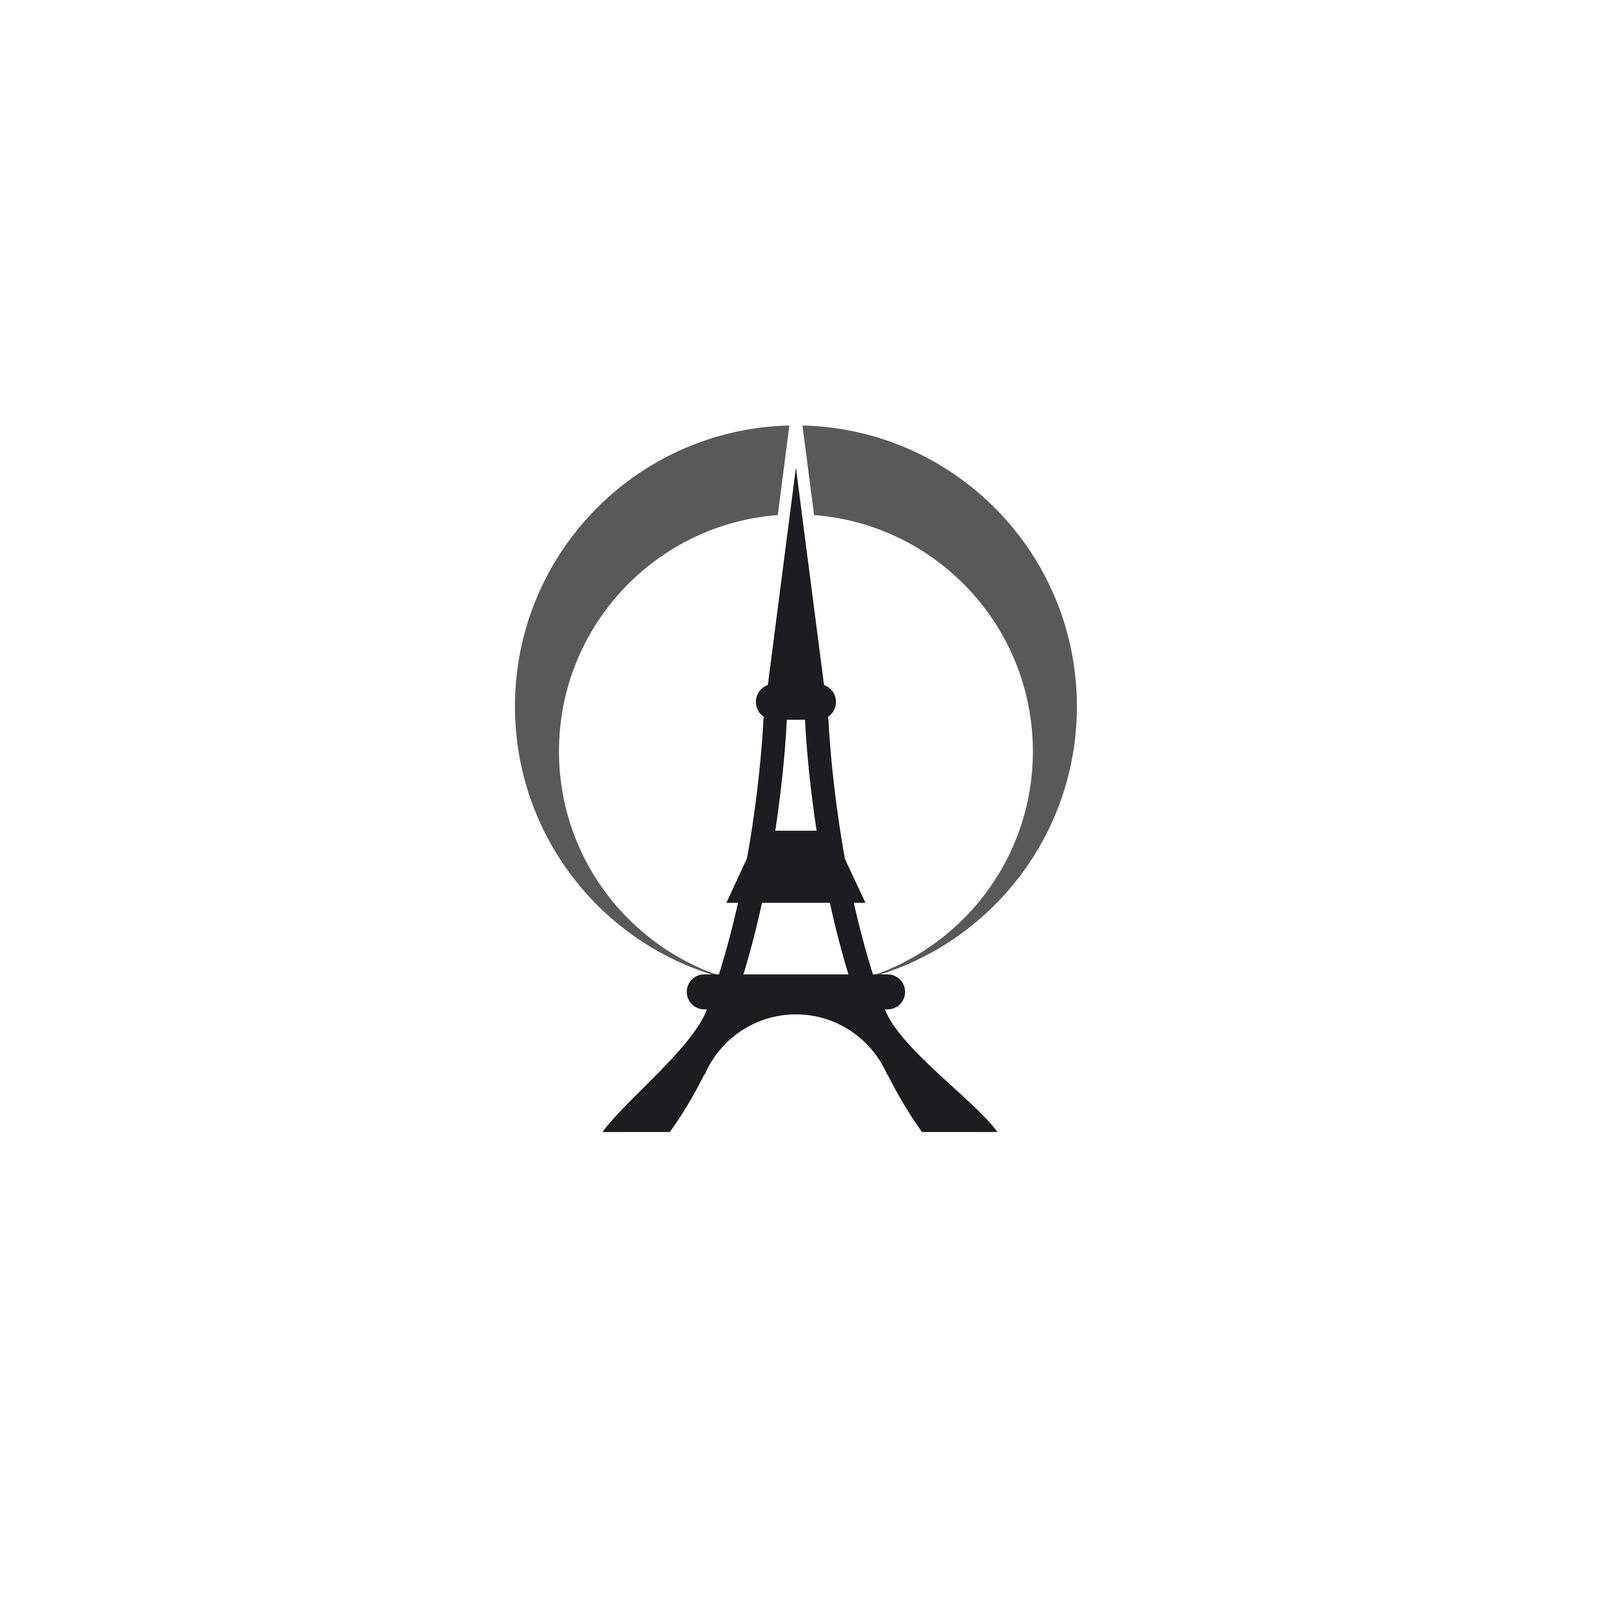 eifel tower logo vector template